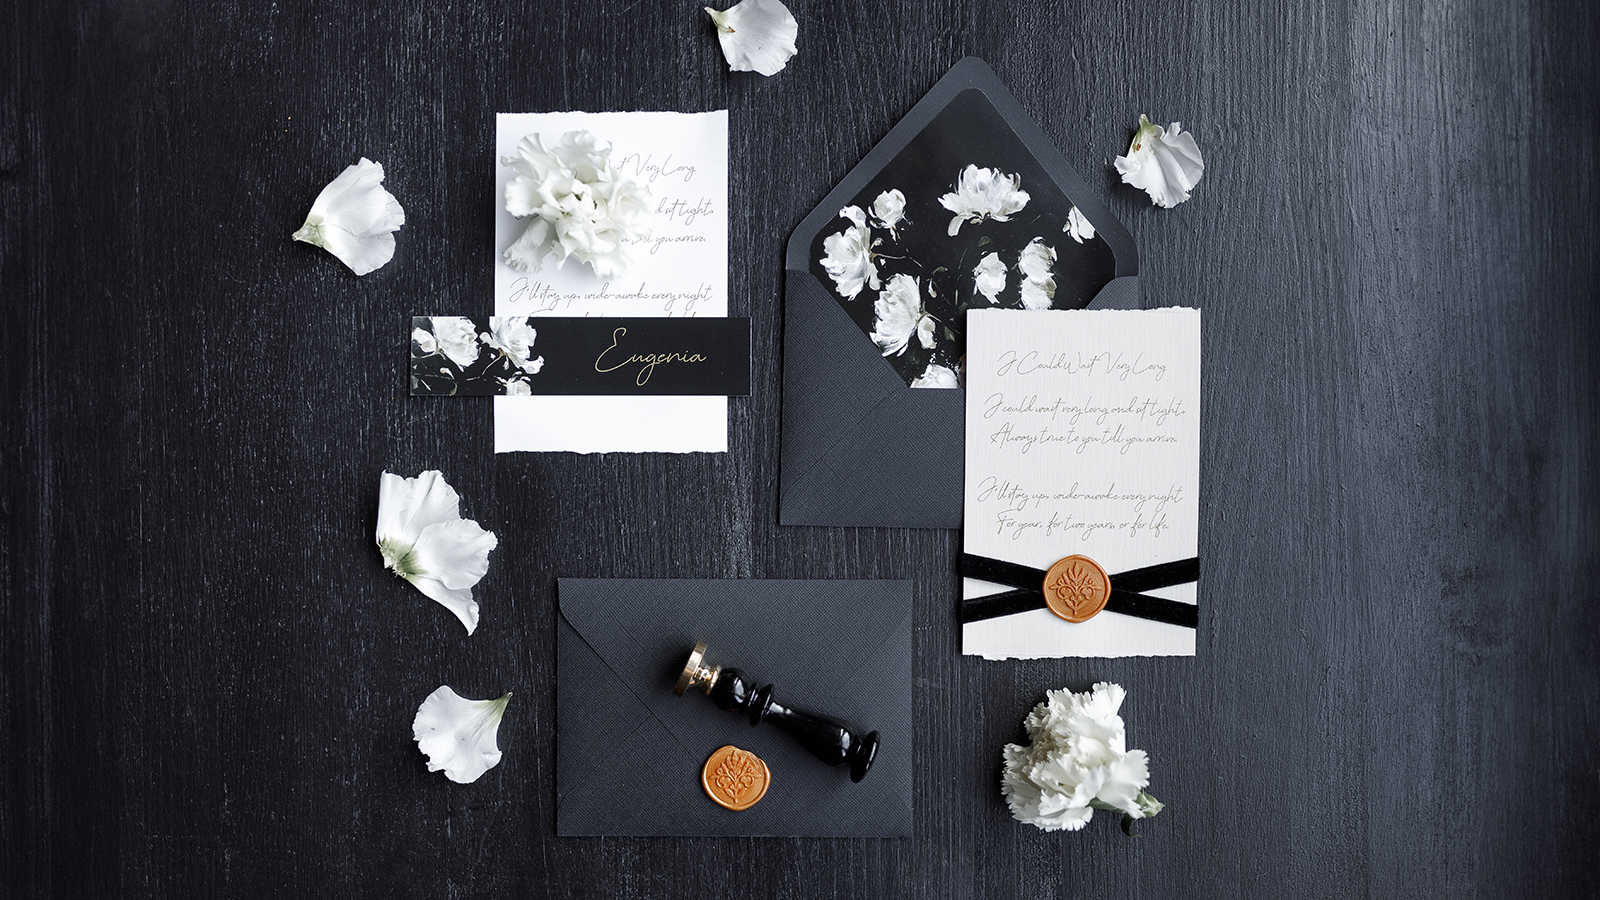 A set of dark wedding printing on a wooden background. Wedding invitation, trendy black background with flower petals.